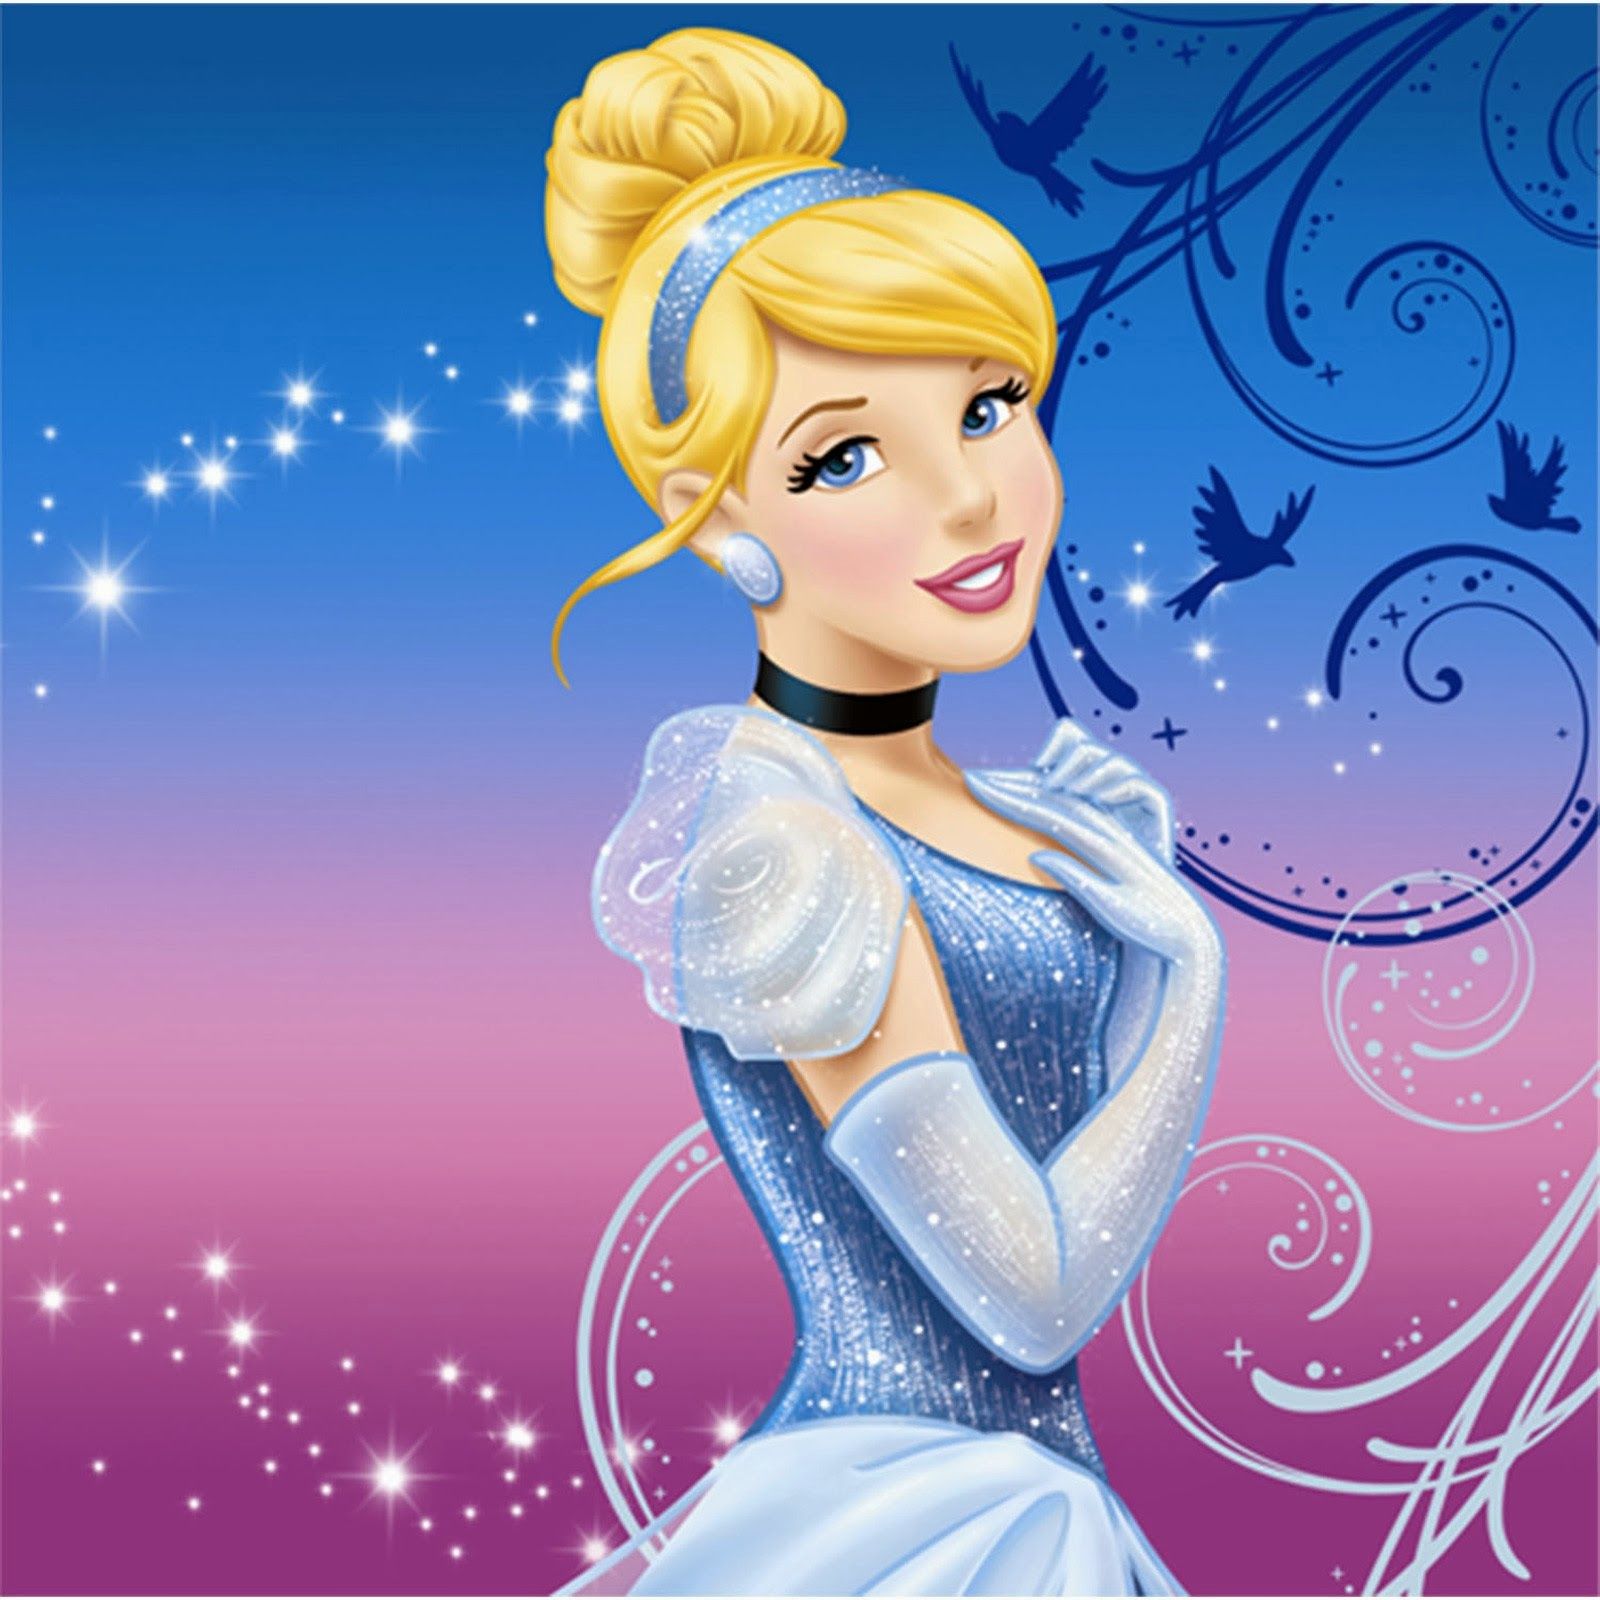 Cinderella wallpaper, Cartoon, HQ Cinderella pictureK